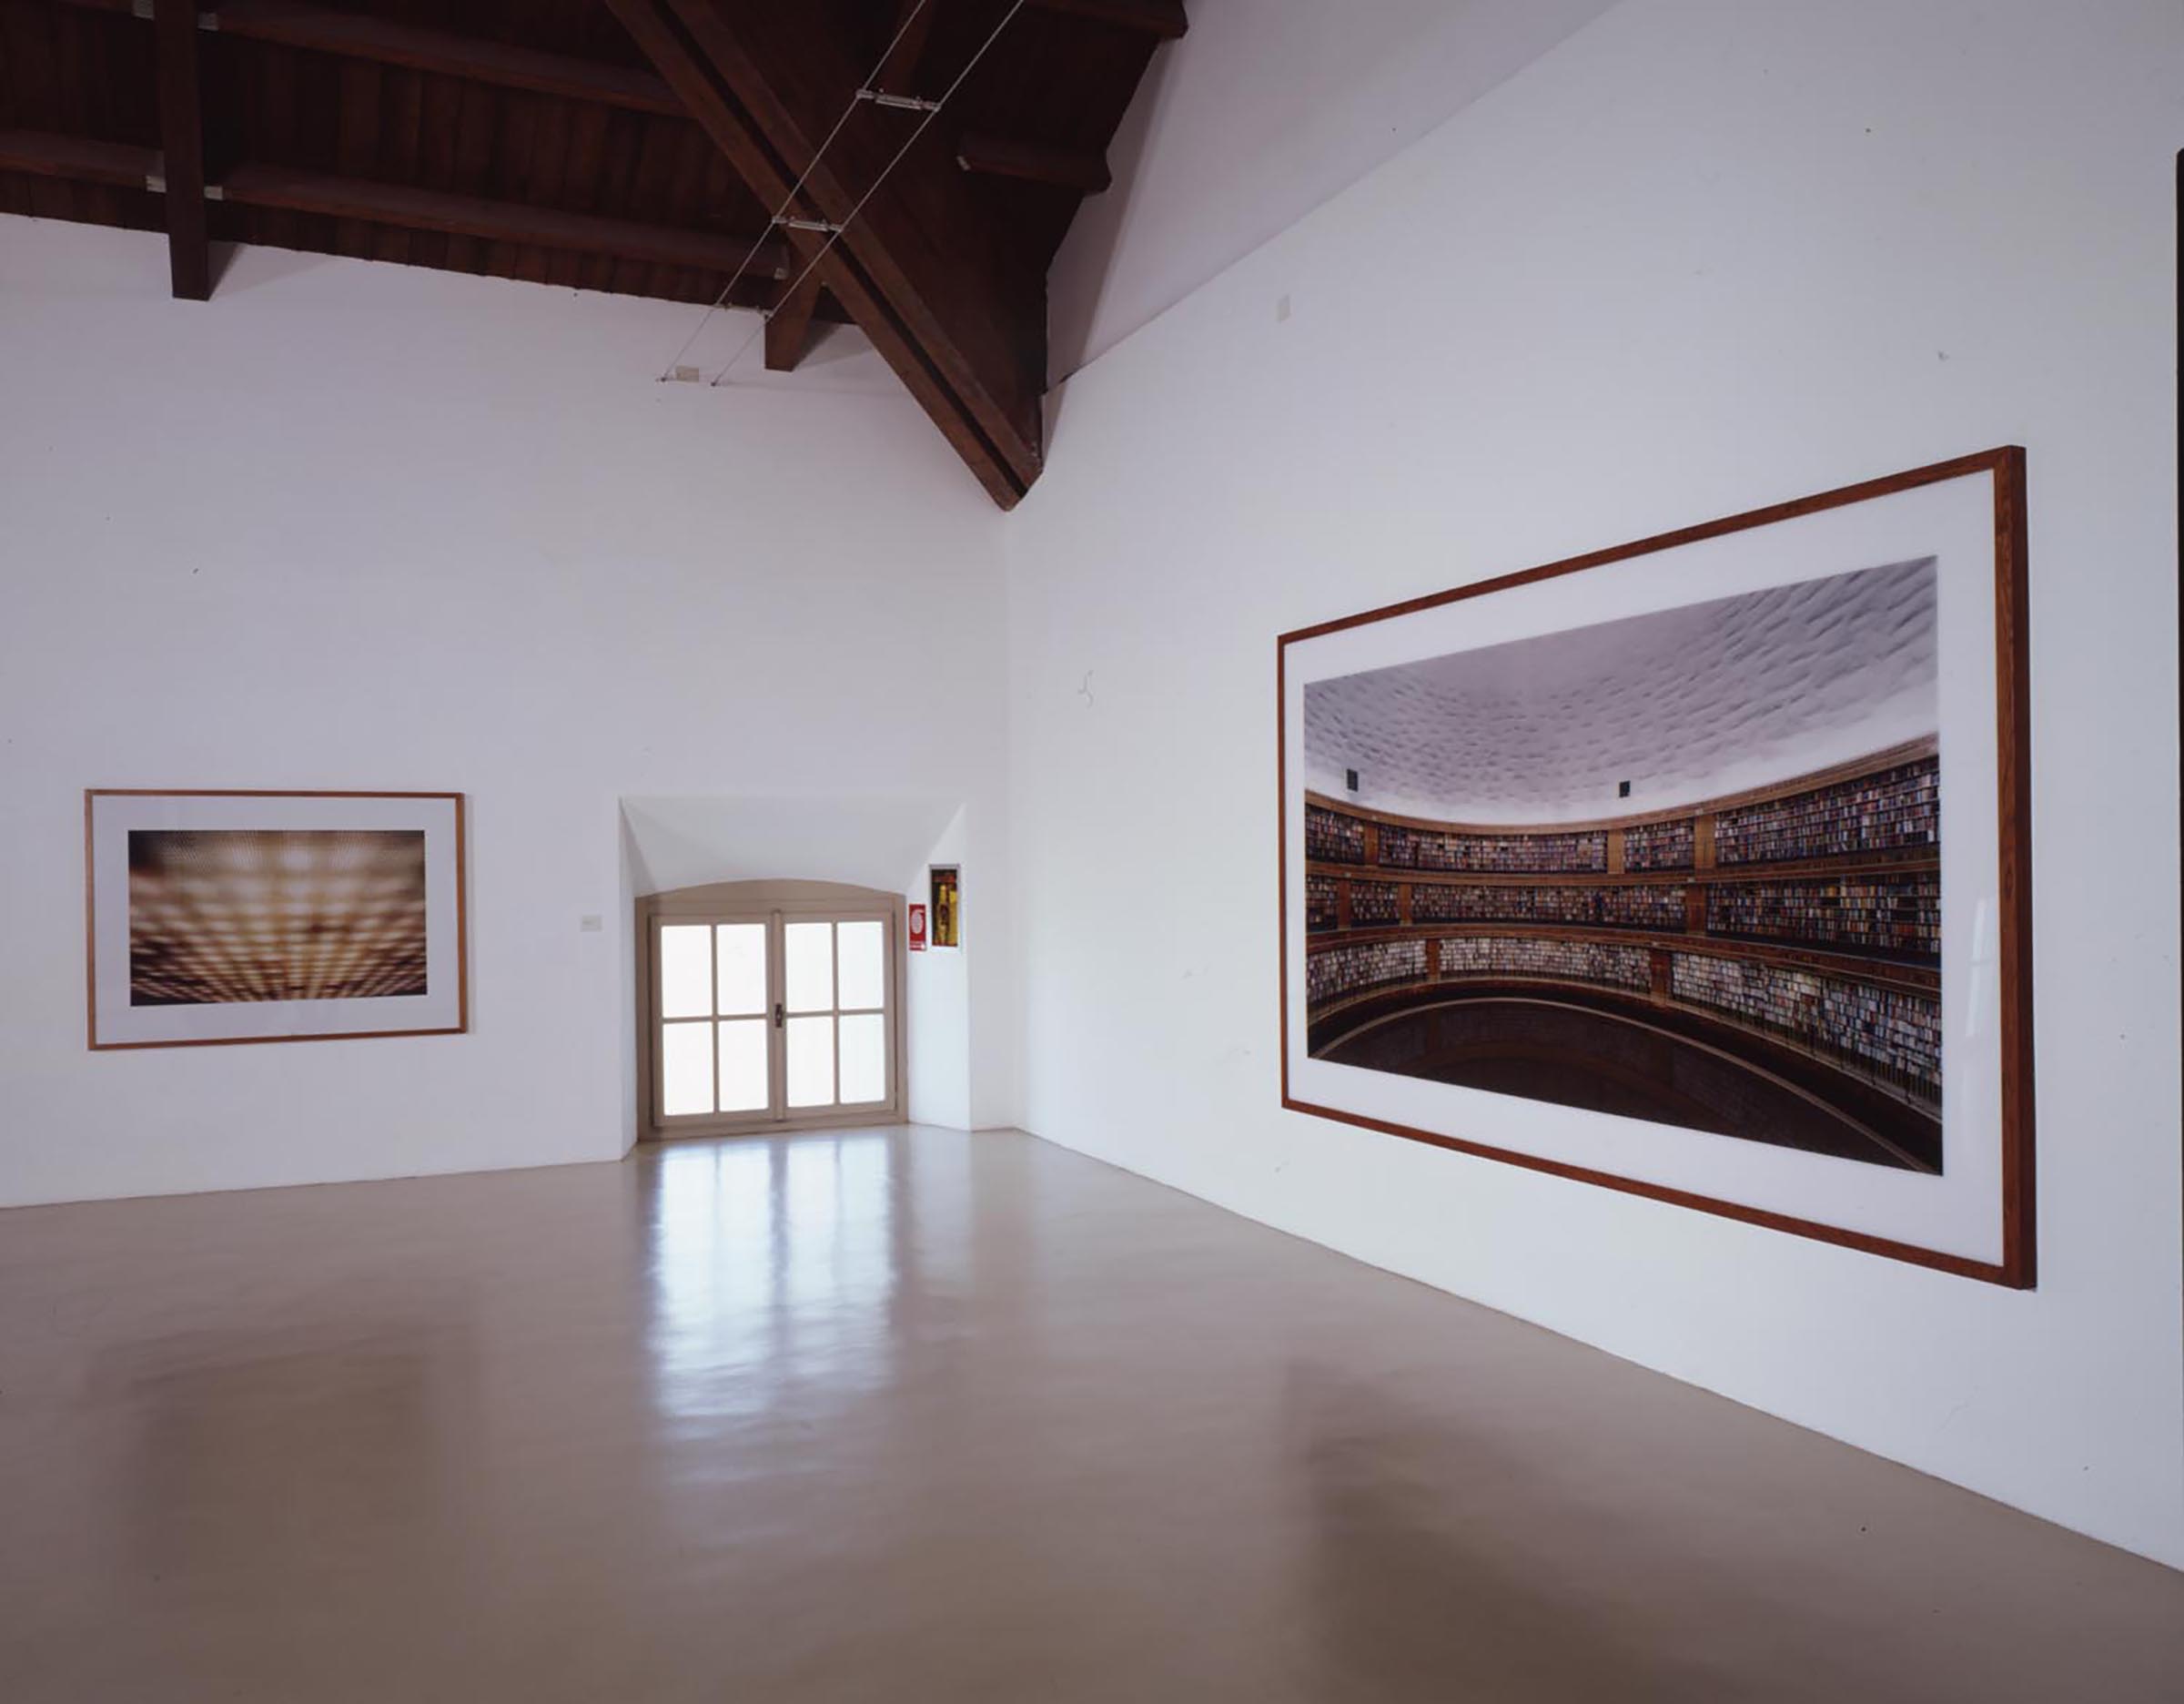 Andreas Gursky, Brasilia, Plenarsaal I, 1994 and Bibliothek, 1999